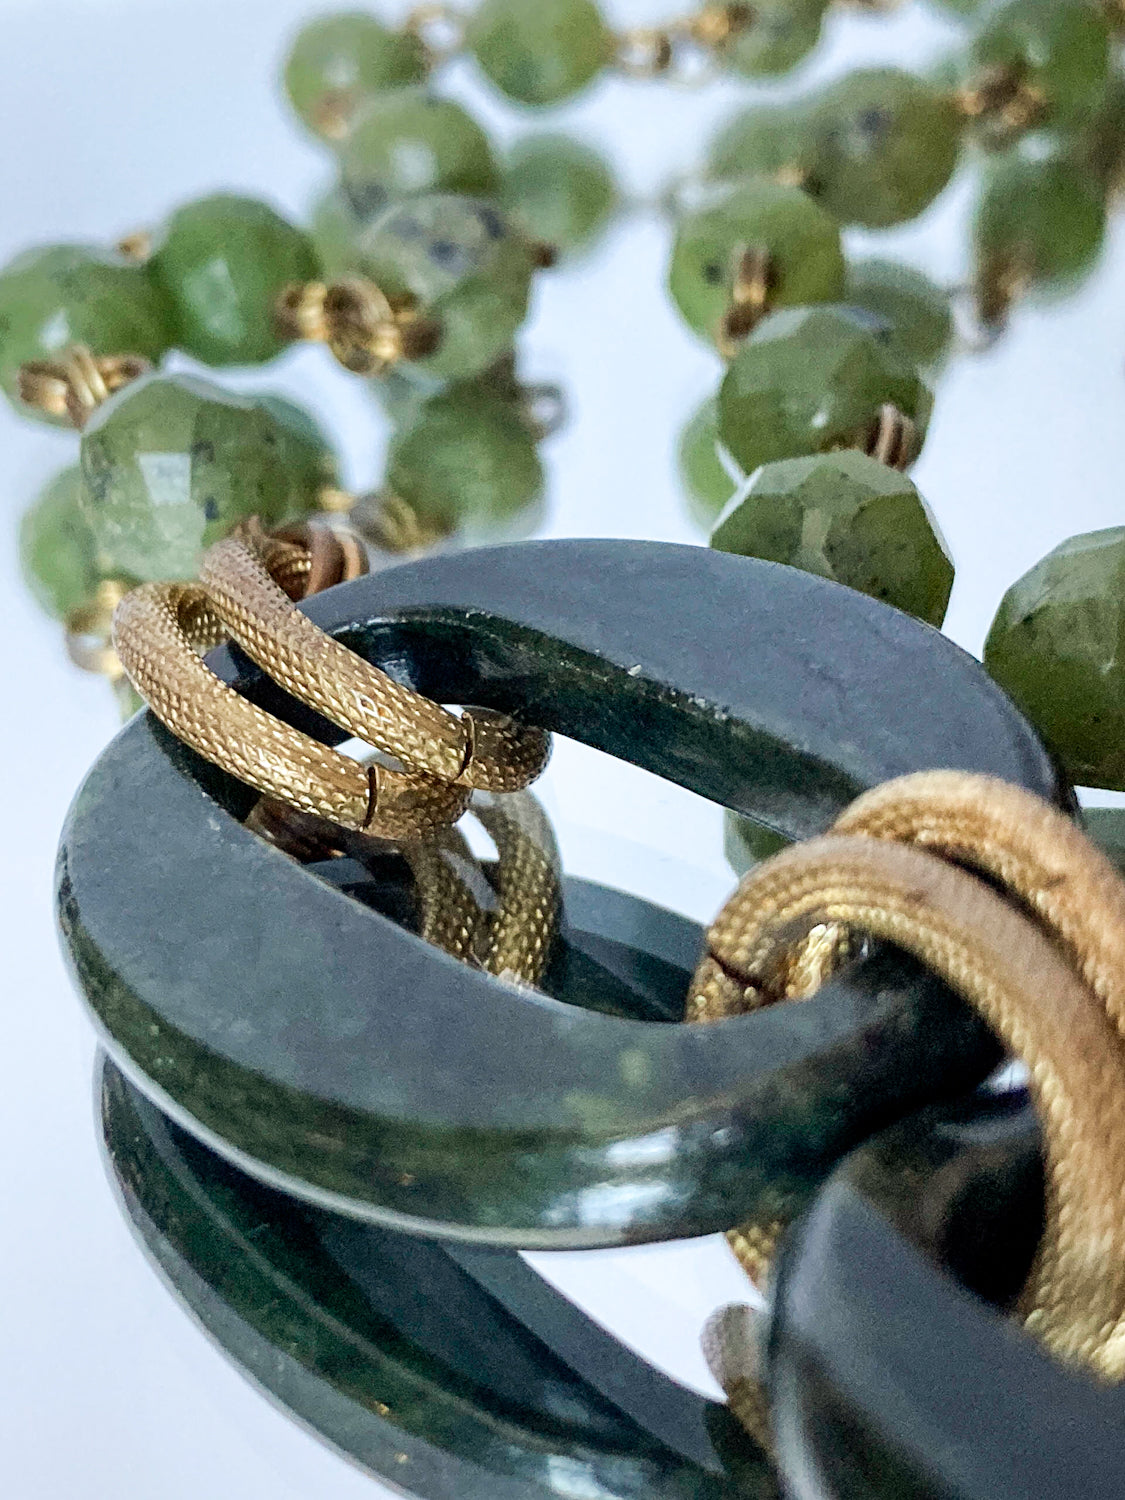 Unsigned Stephen Dweck Bronze Green Quartz Nephrite Bead Long Necklace